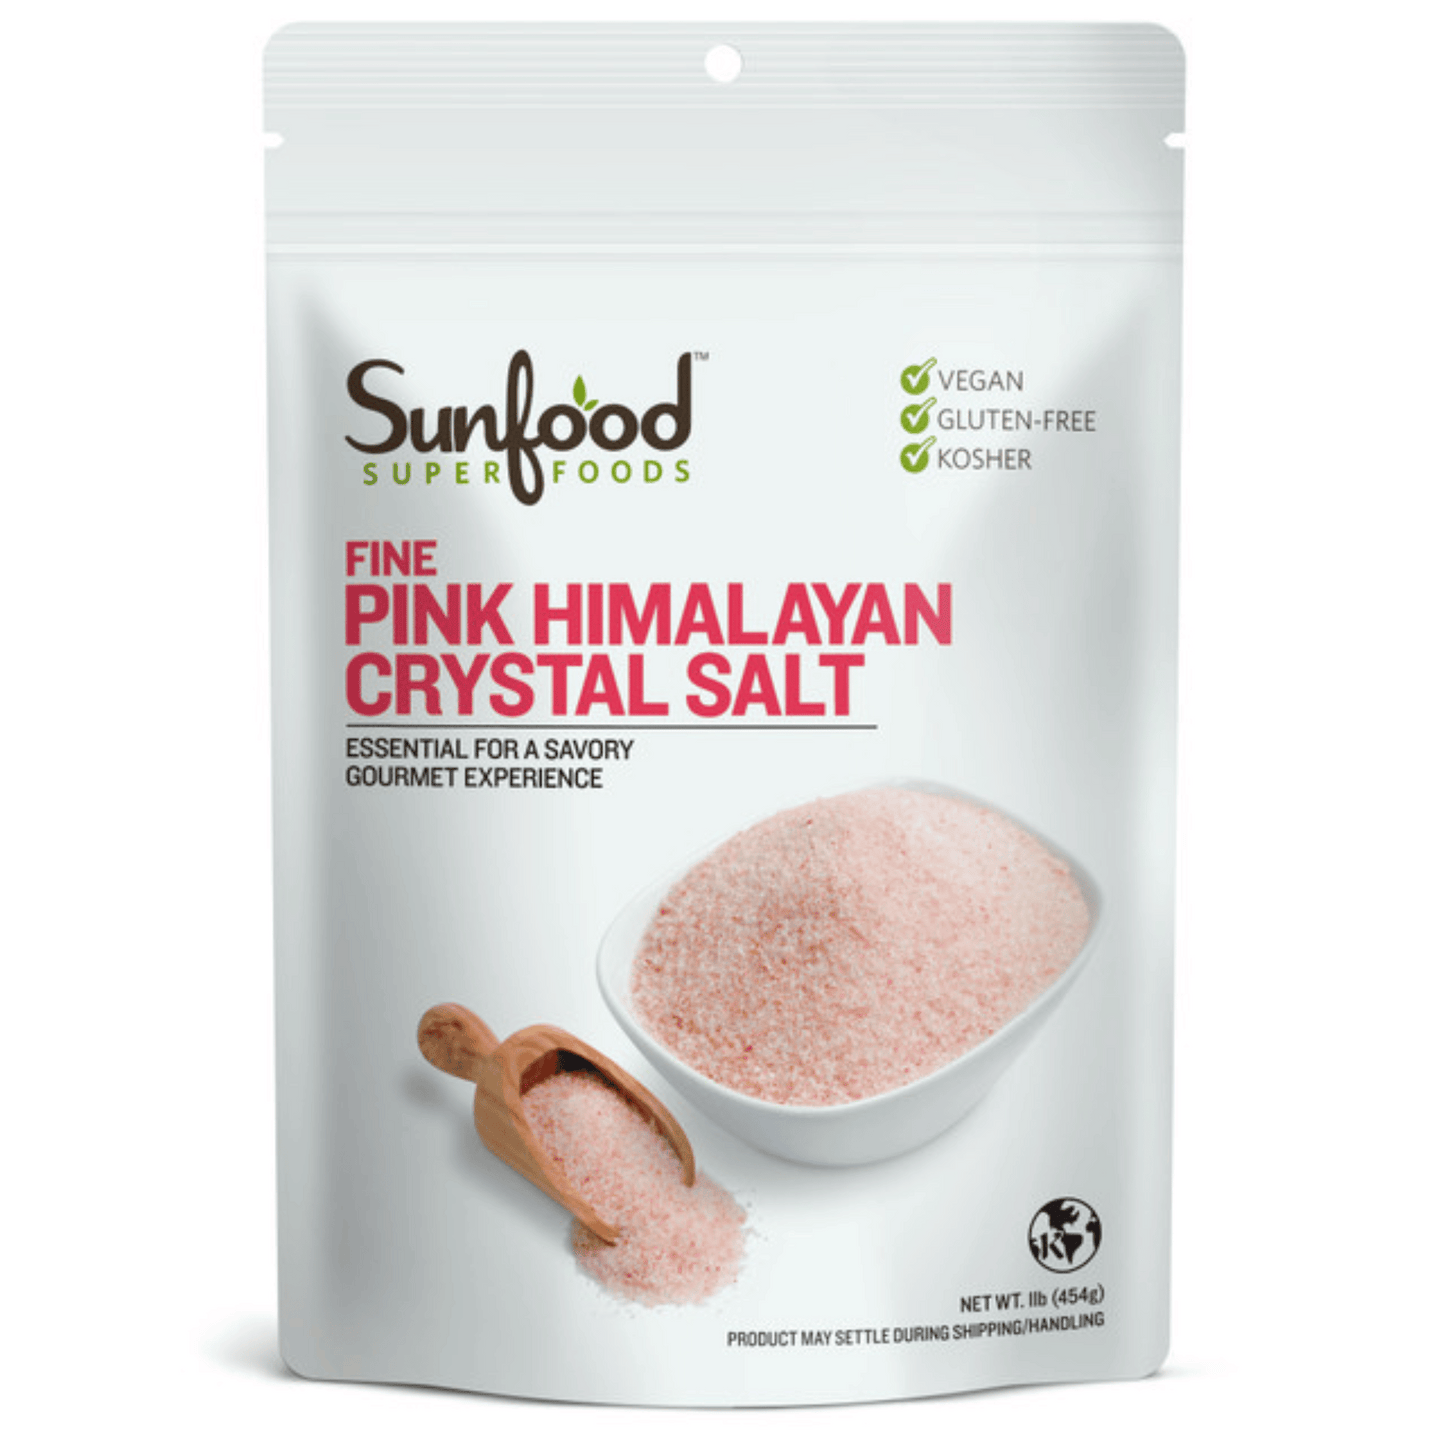 Primary Image of Fine Pink Himalayan Crystal Salt